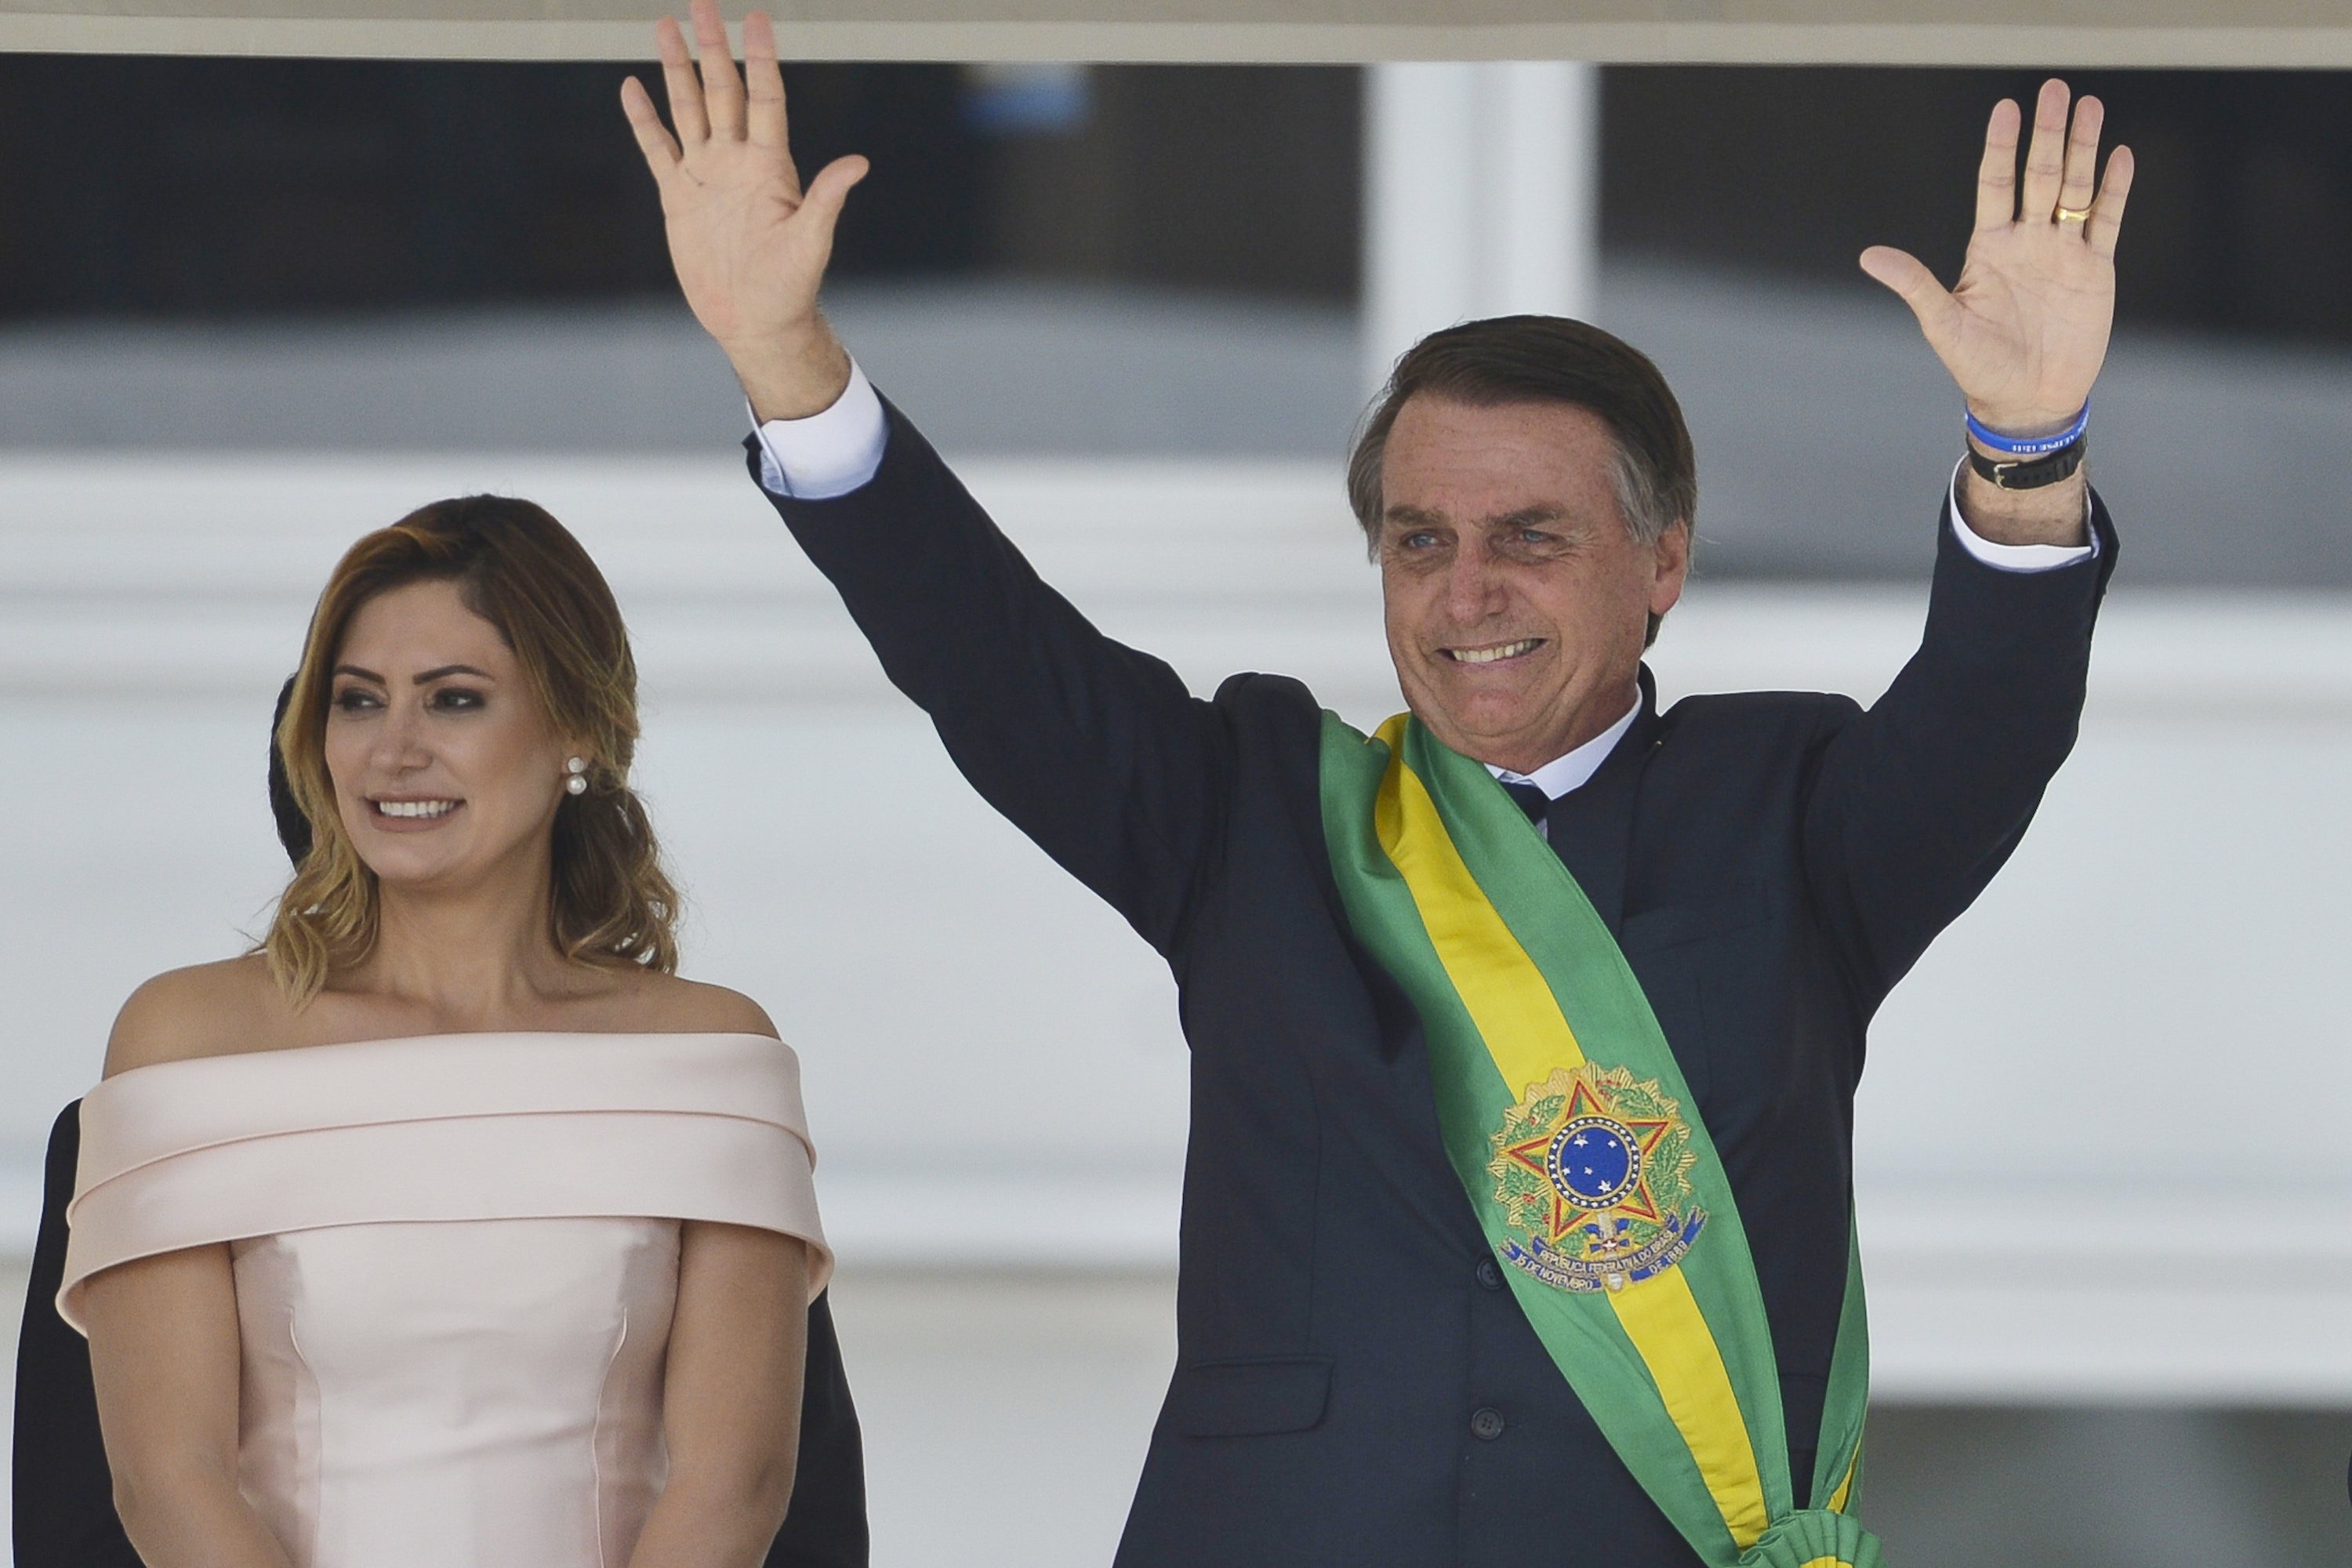 Presidente Jair Bolsonaro saúda o povo depois de receber a faixa presidencial. FOTO Agência Brasil